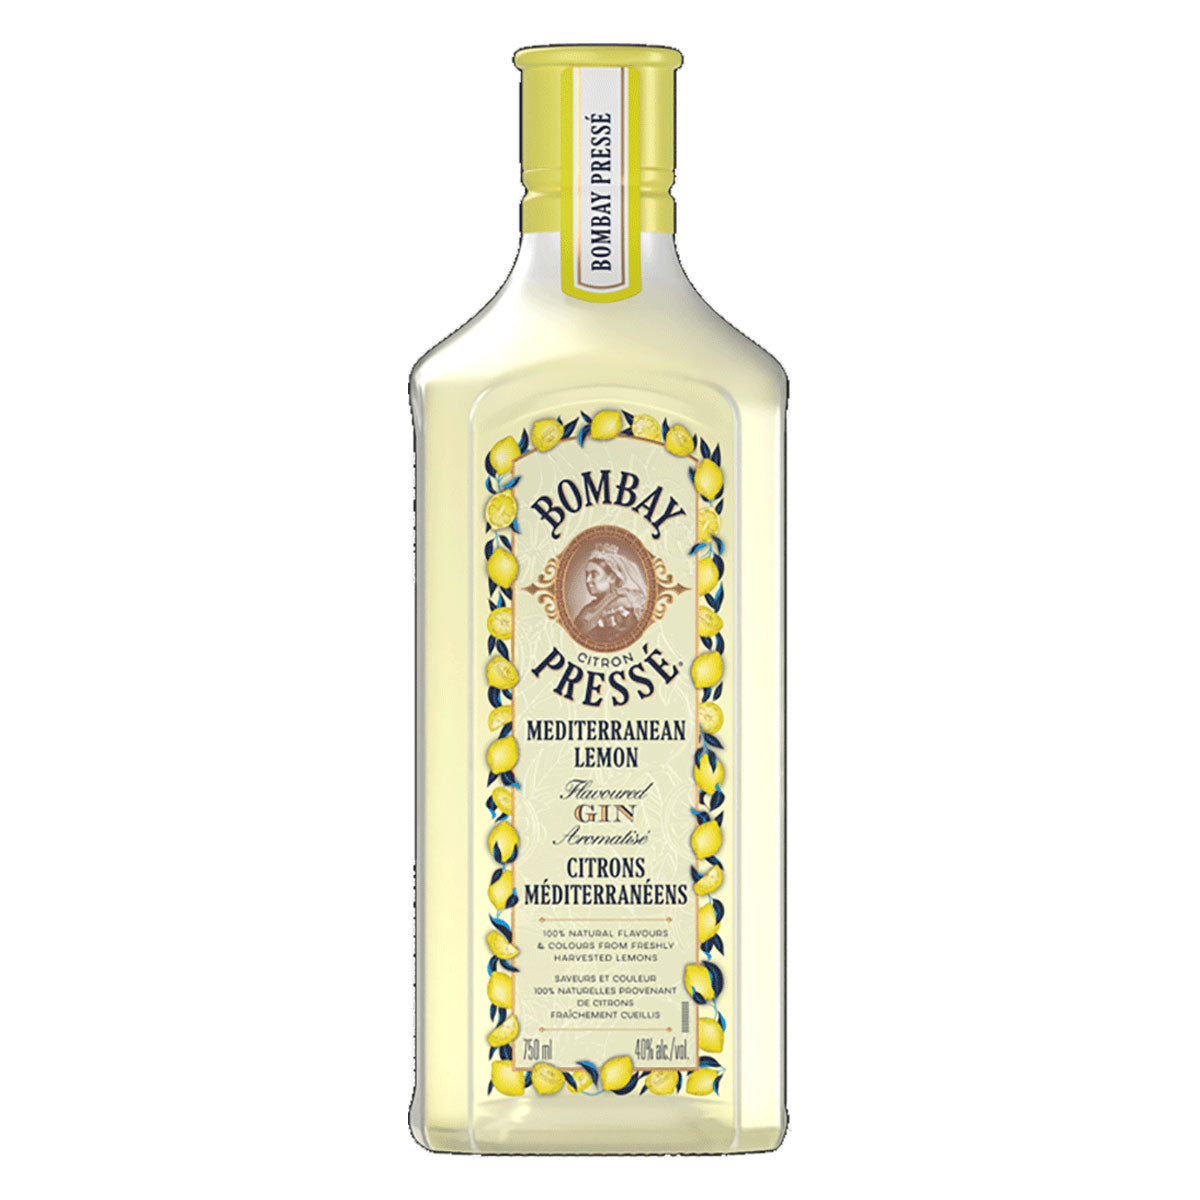 Bombay Presse Citron Mediterranean Lemon 750ml – Gin